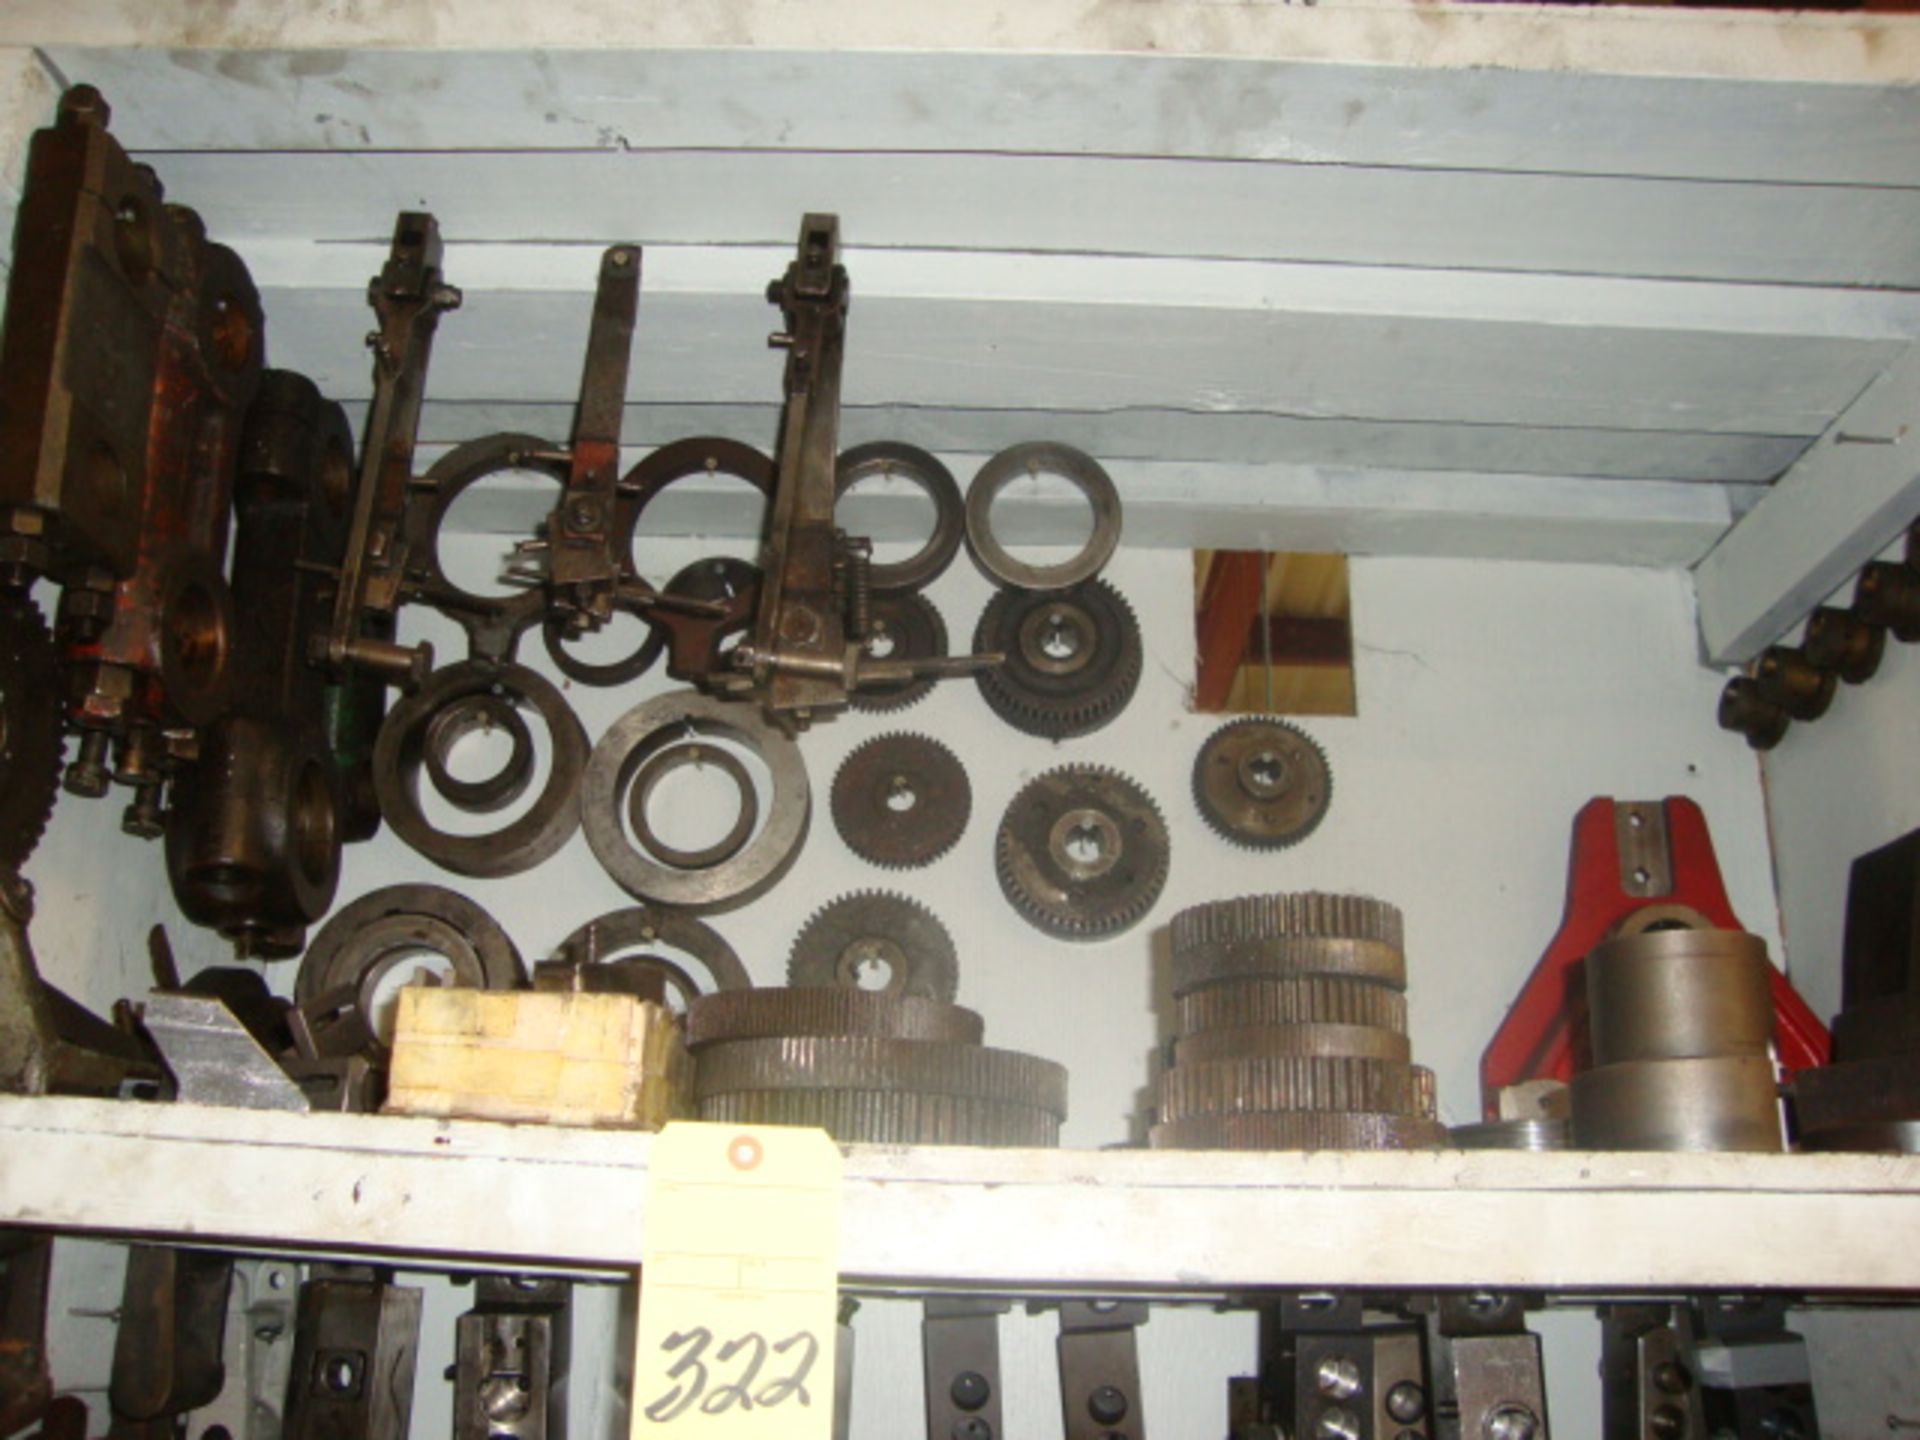 LOT CONSISTING OF WATERBURY FARREL REPAIR PARTS: gears, levers, blocks, slides, oilers, strippers,